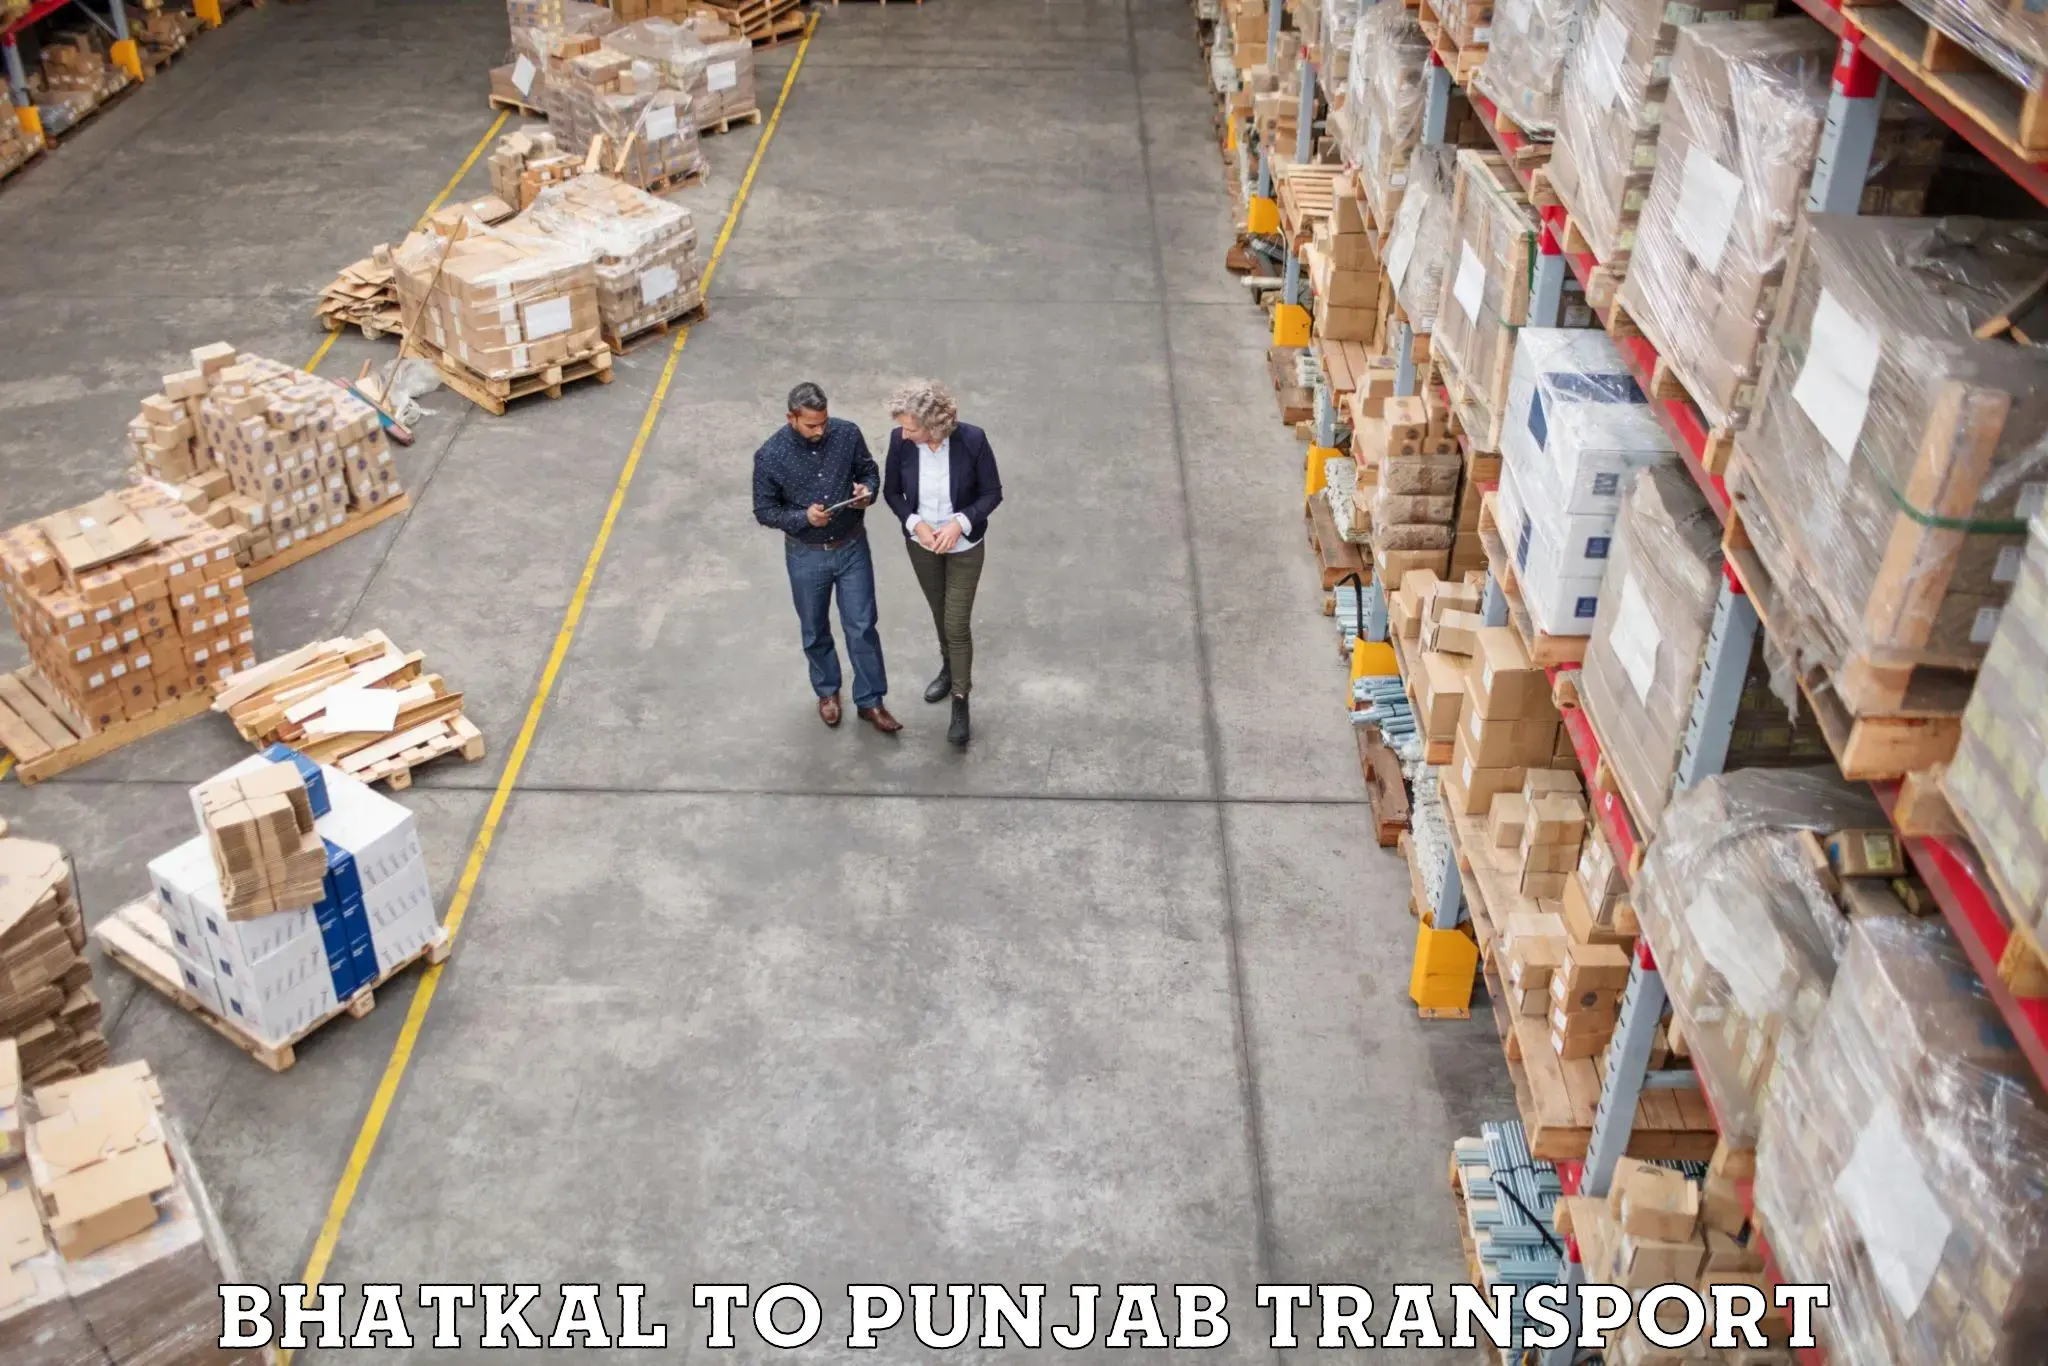 Furniture transport service Bhatkal to Amritsar